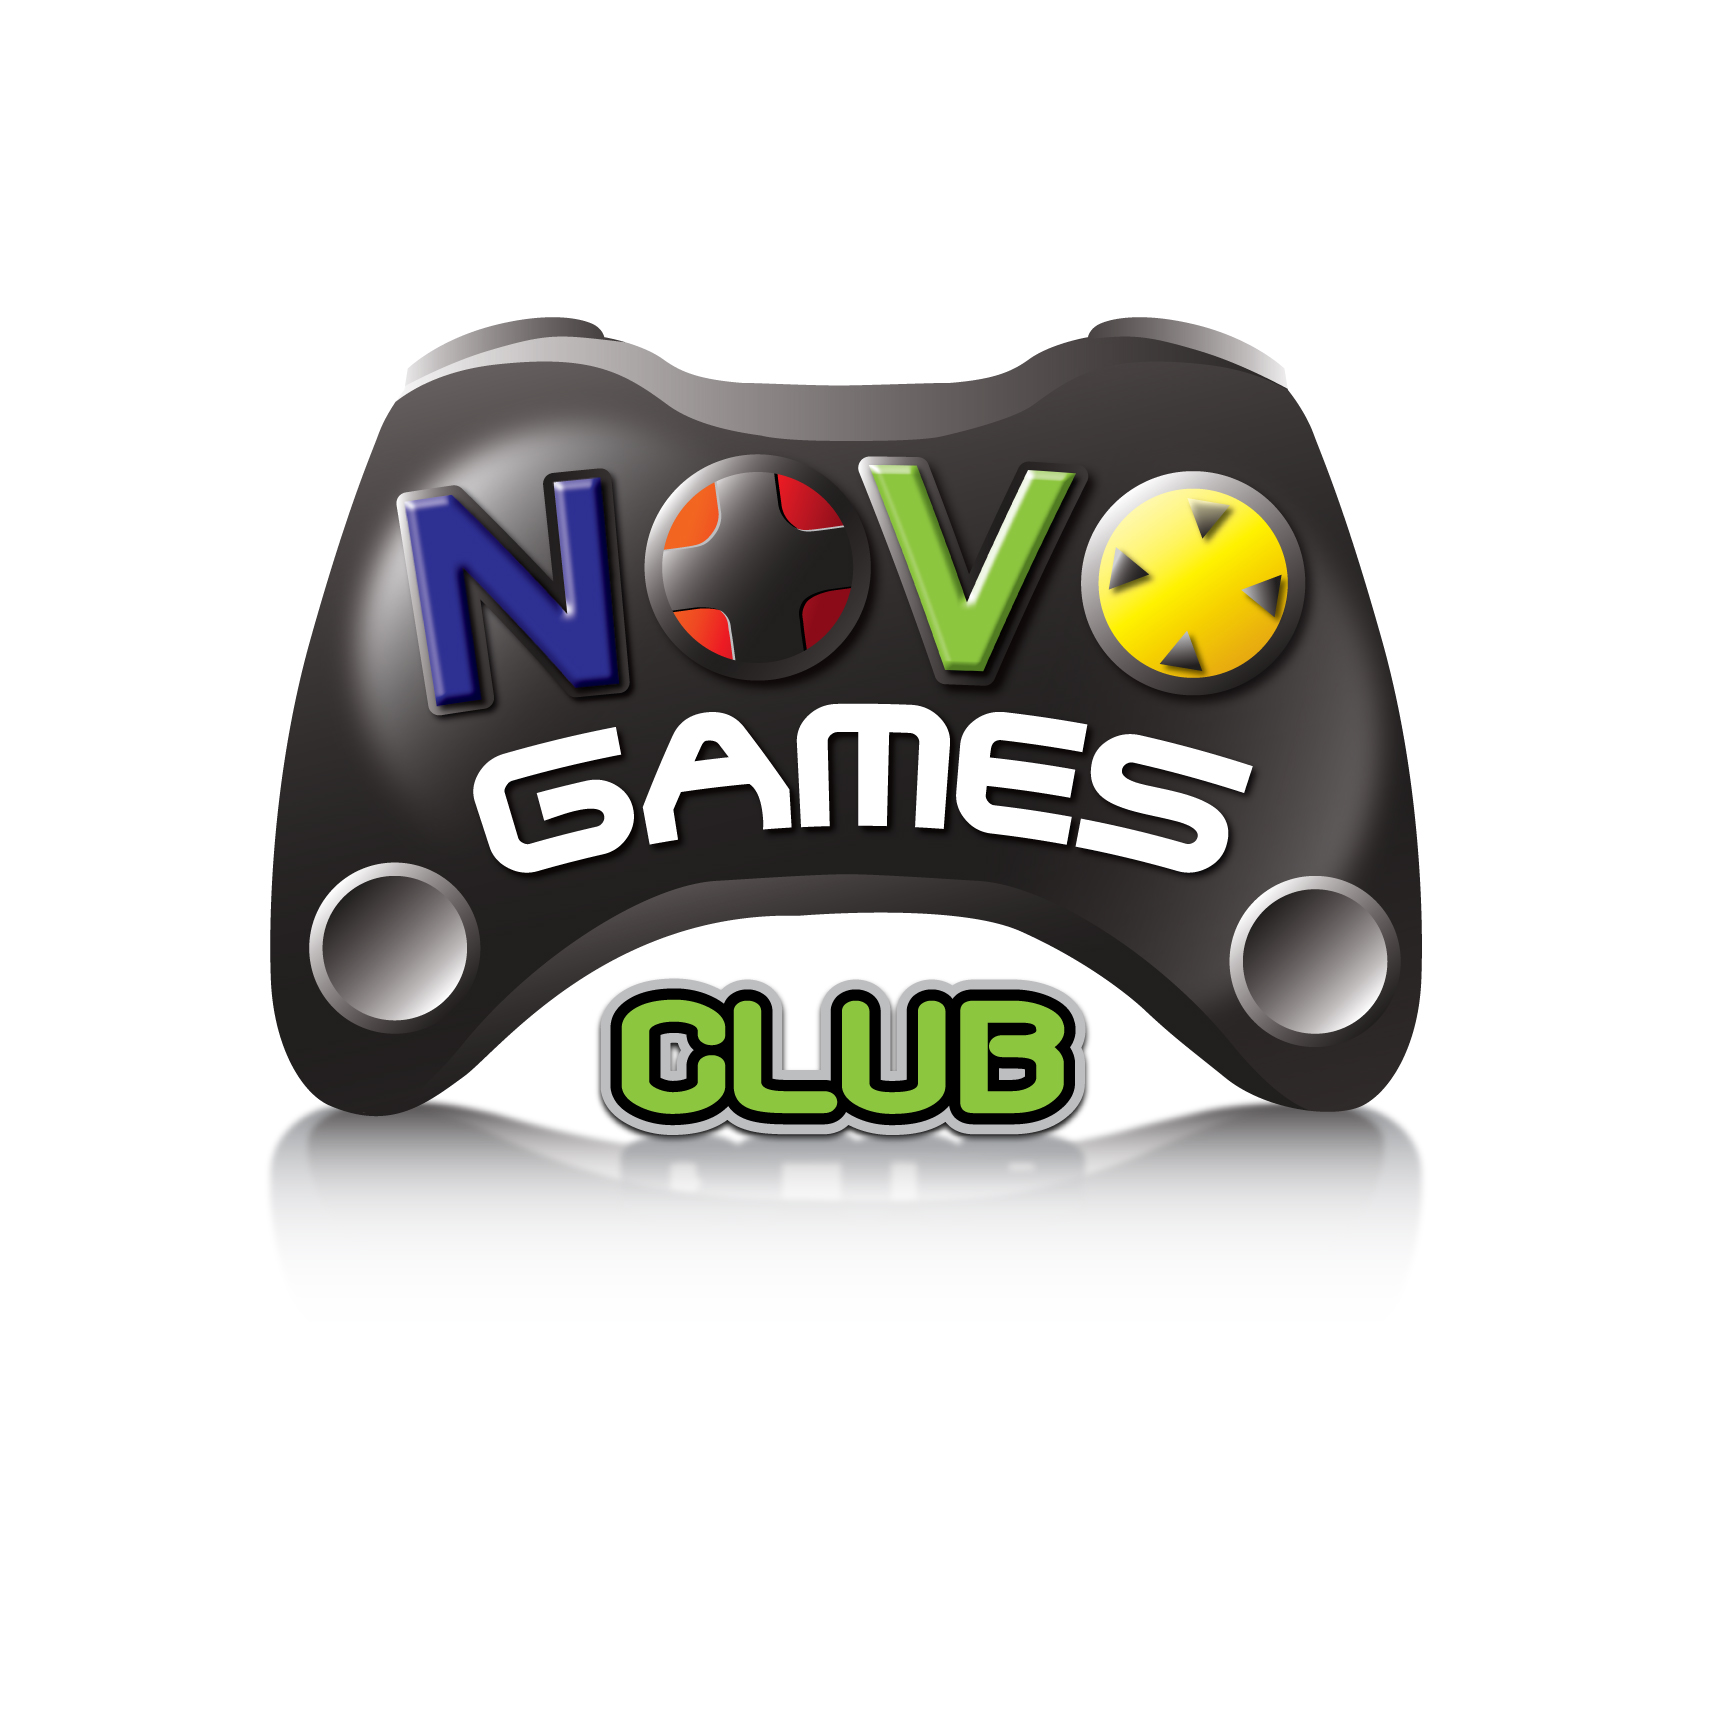 NOVO GAMES CLUB